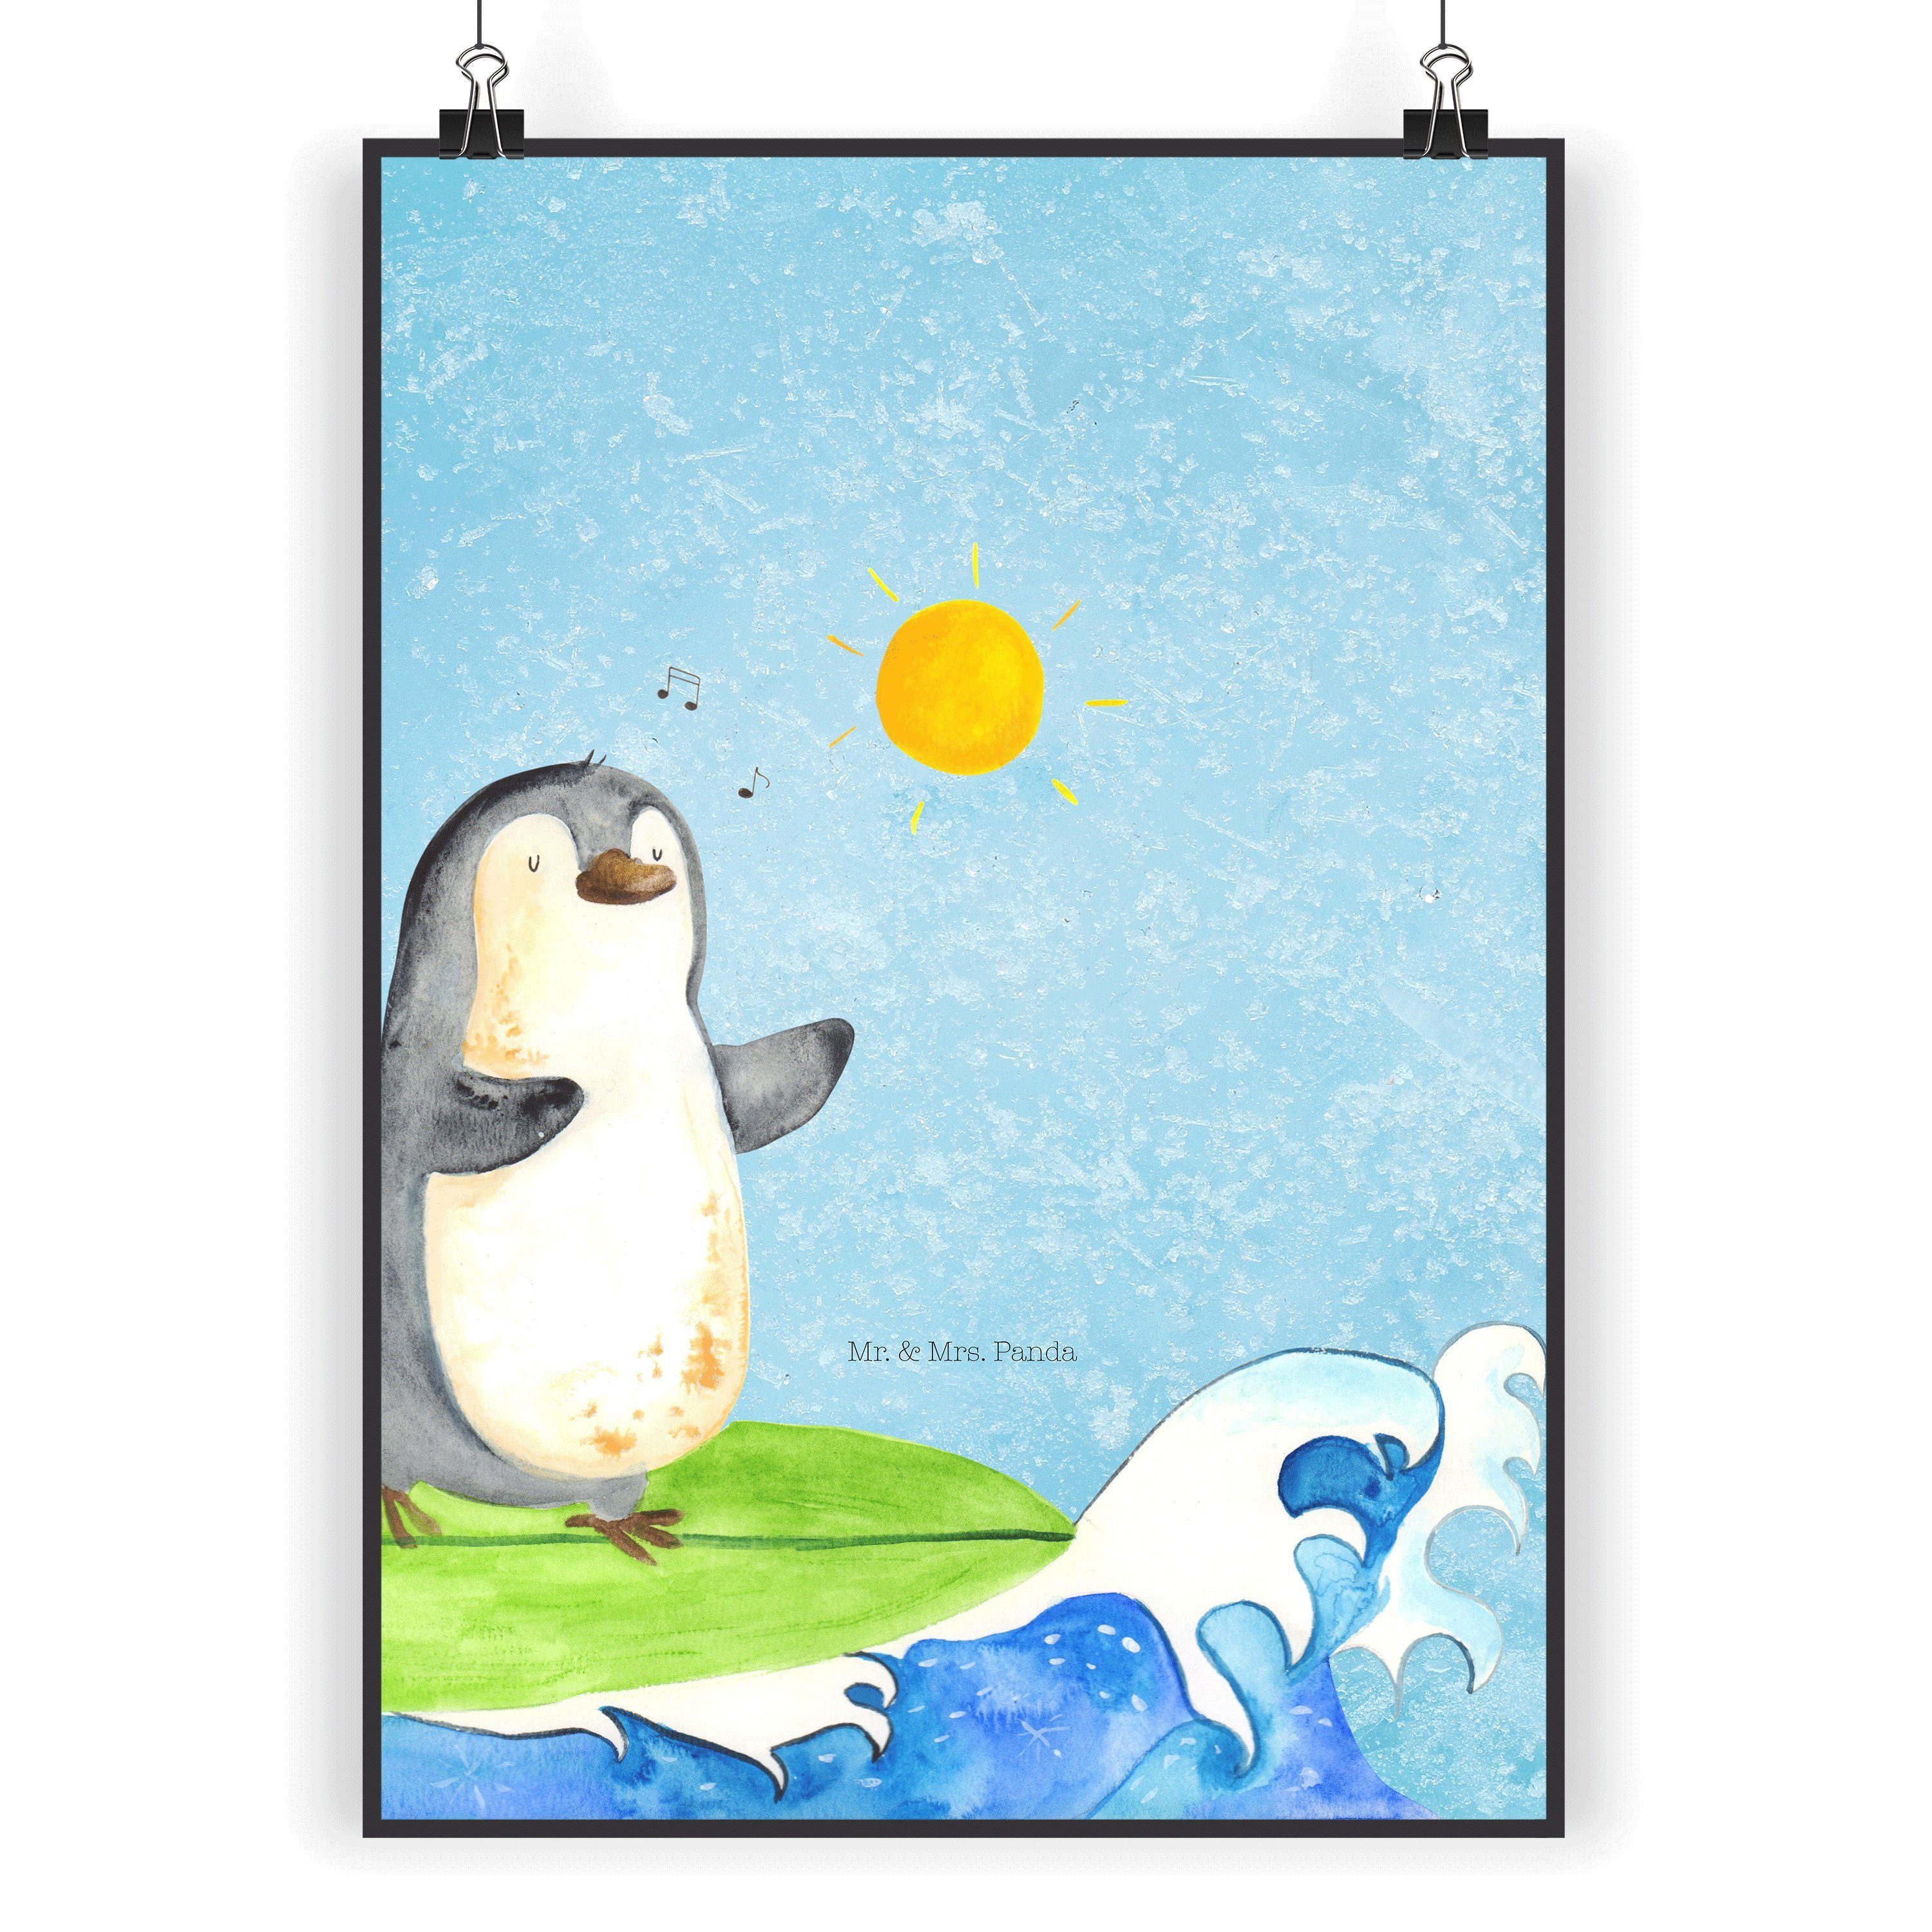 Mr. & Mrs. Panda Poster DIN A5 Pinguin Surfer - Eisblau - Geschenk, Kunstdruck, Bild, Wellen, Pinguin Surfer (1 St), Lebendige Farben